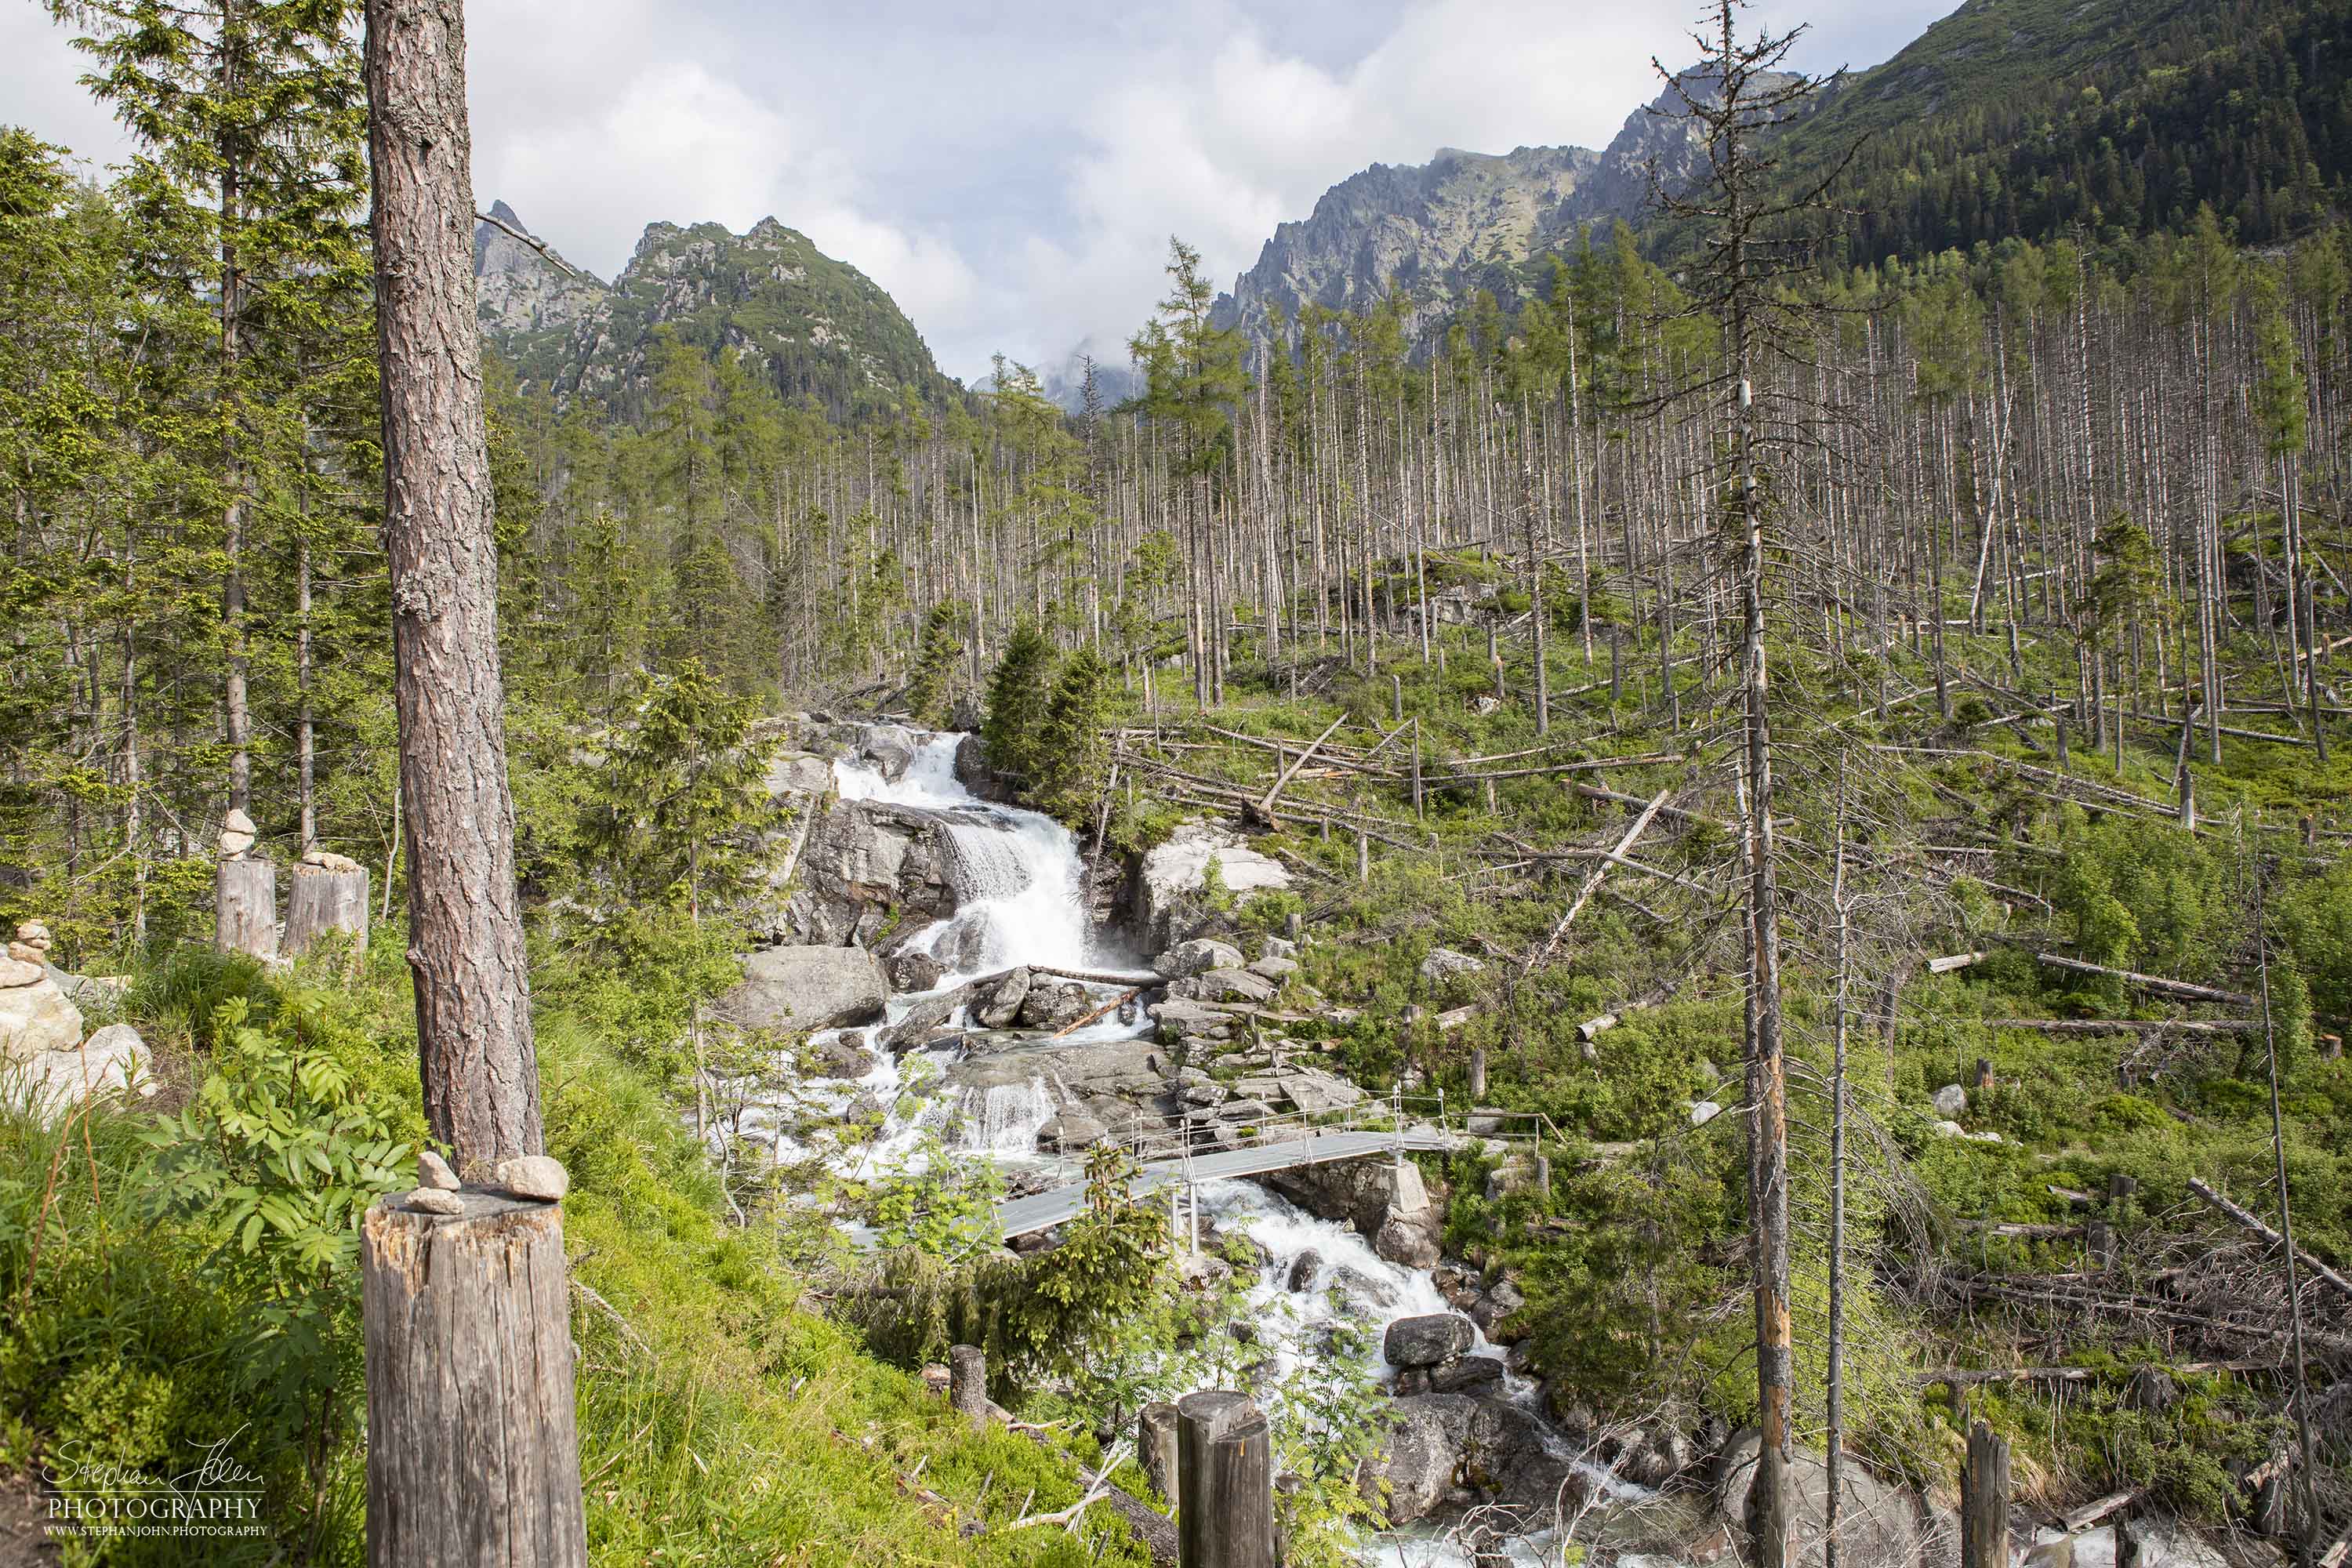 Cold Creek Waterfalls
Vodopády Studeného potoka